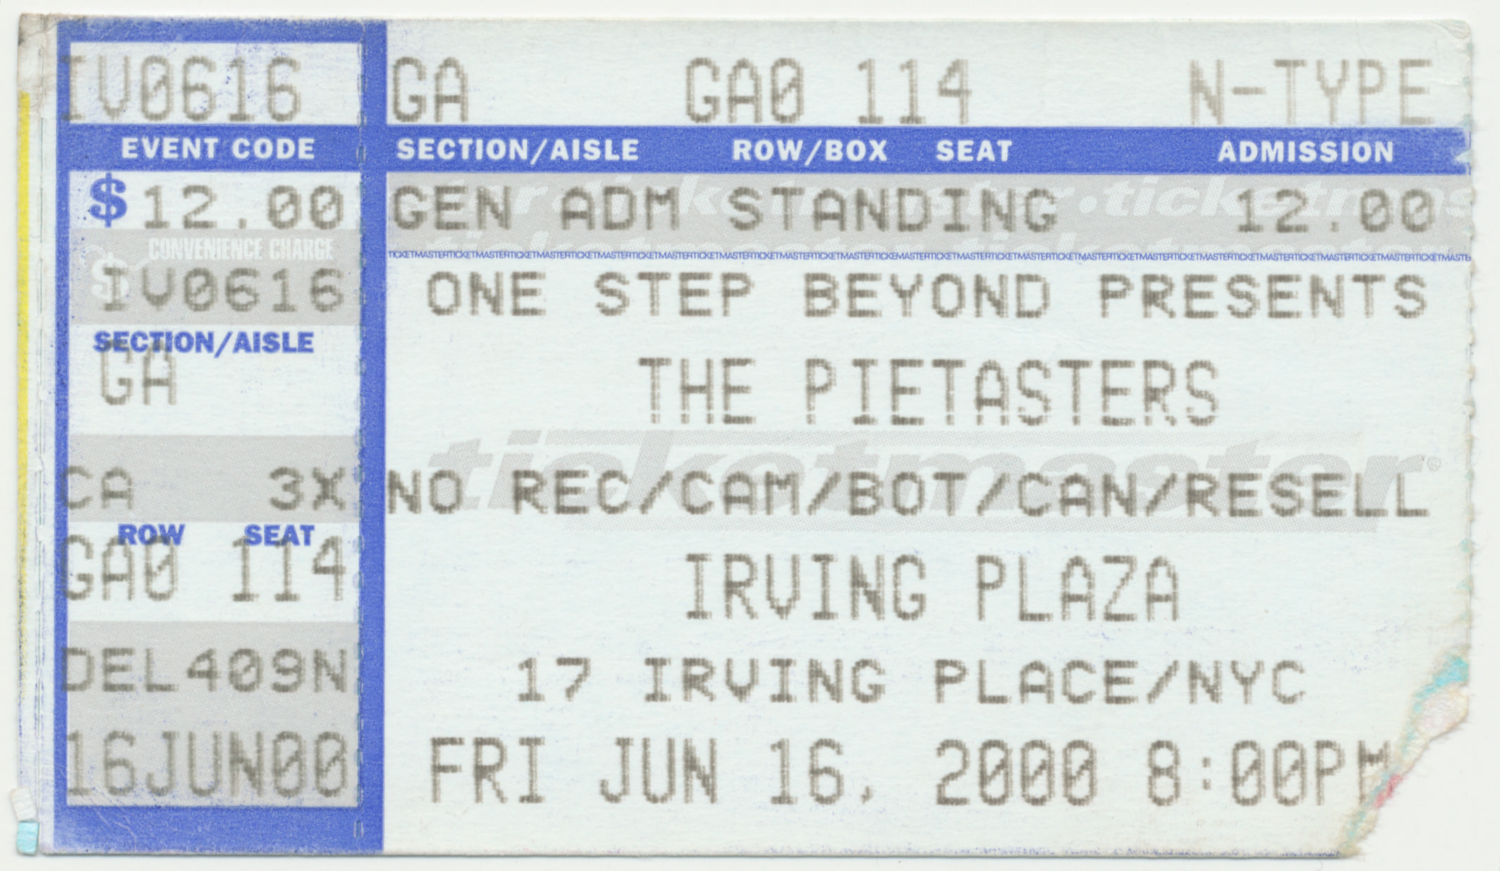 The Pietasters - Irving Plaza, New York - June 16, 2000 concert - My ...